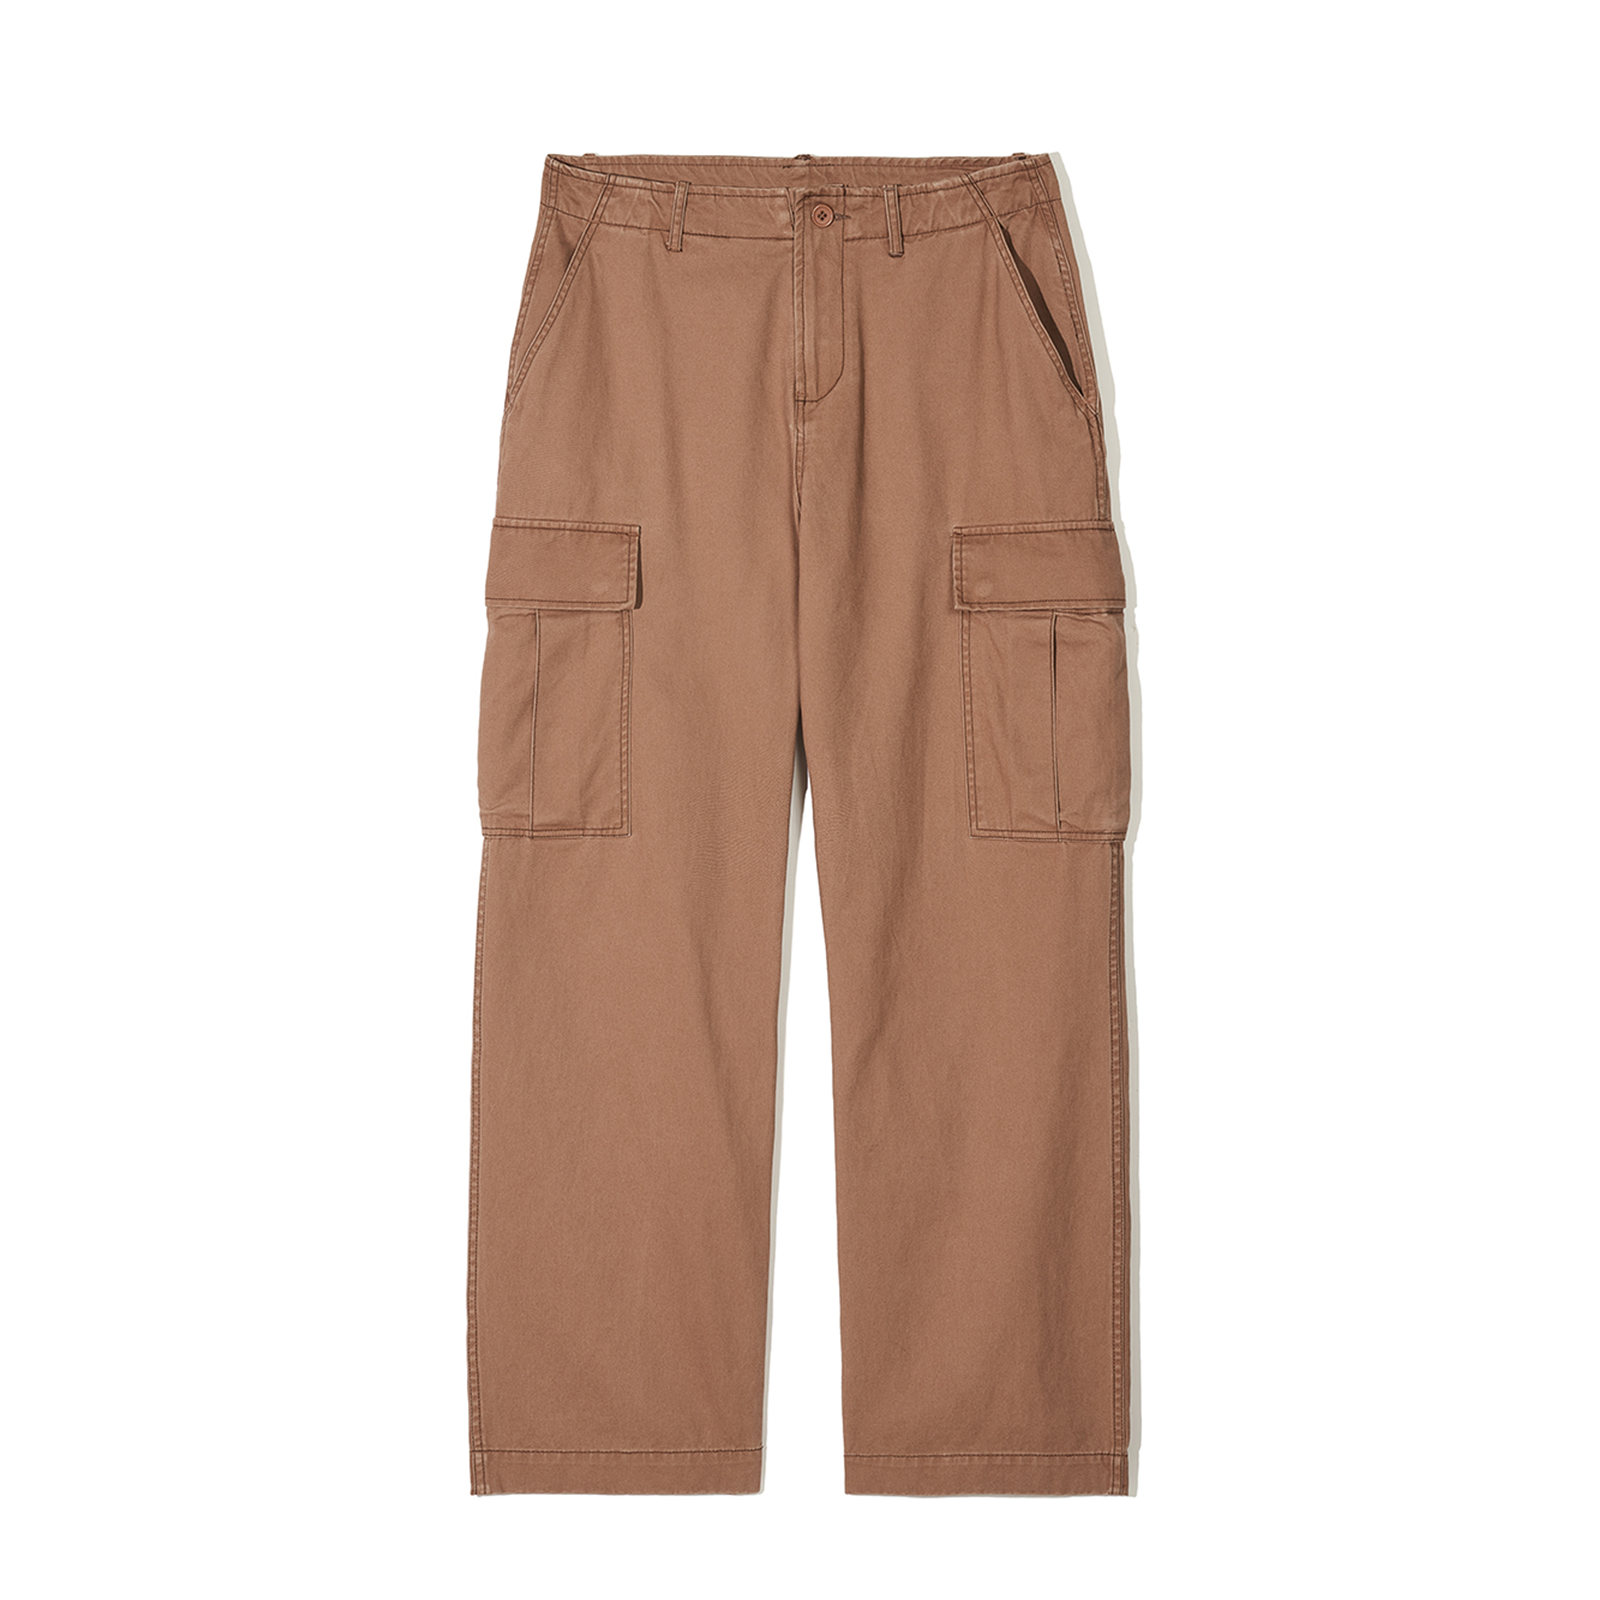 Vintage Washed Cargo Pants in Orange Brown